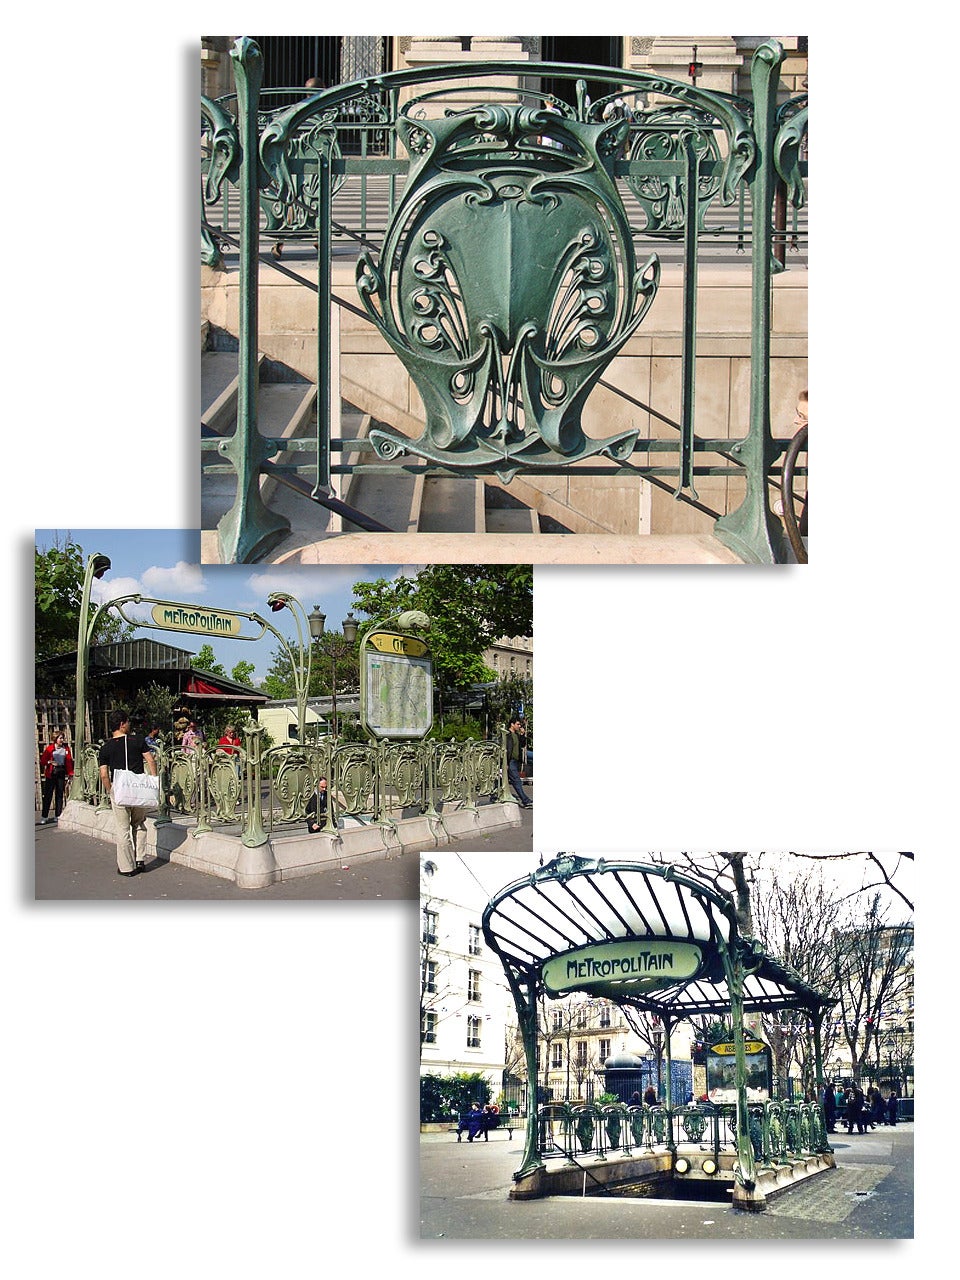 French Original Art Nouveau Paris Metro Shield by Hector Guimard